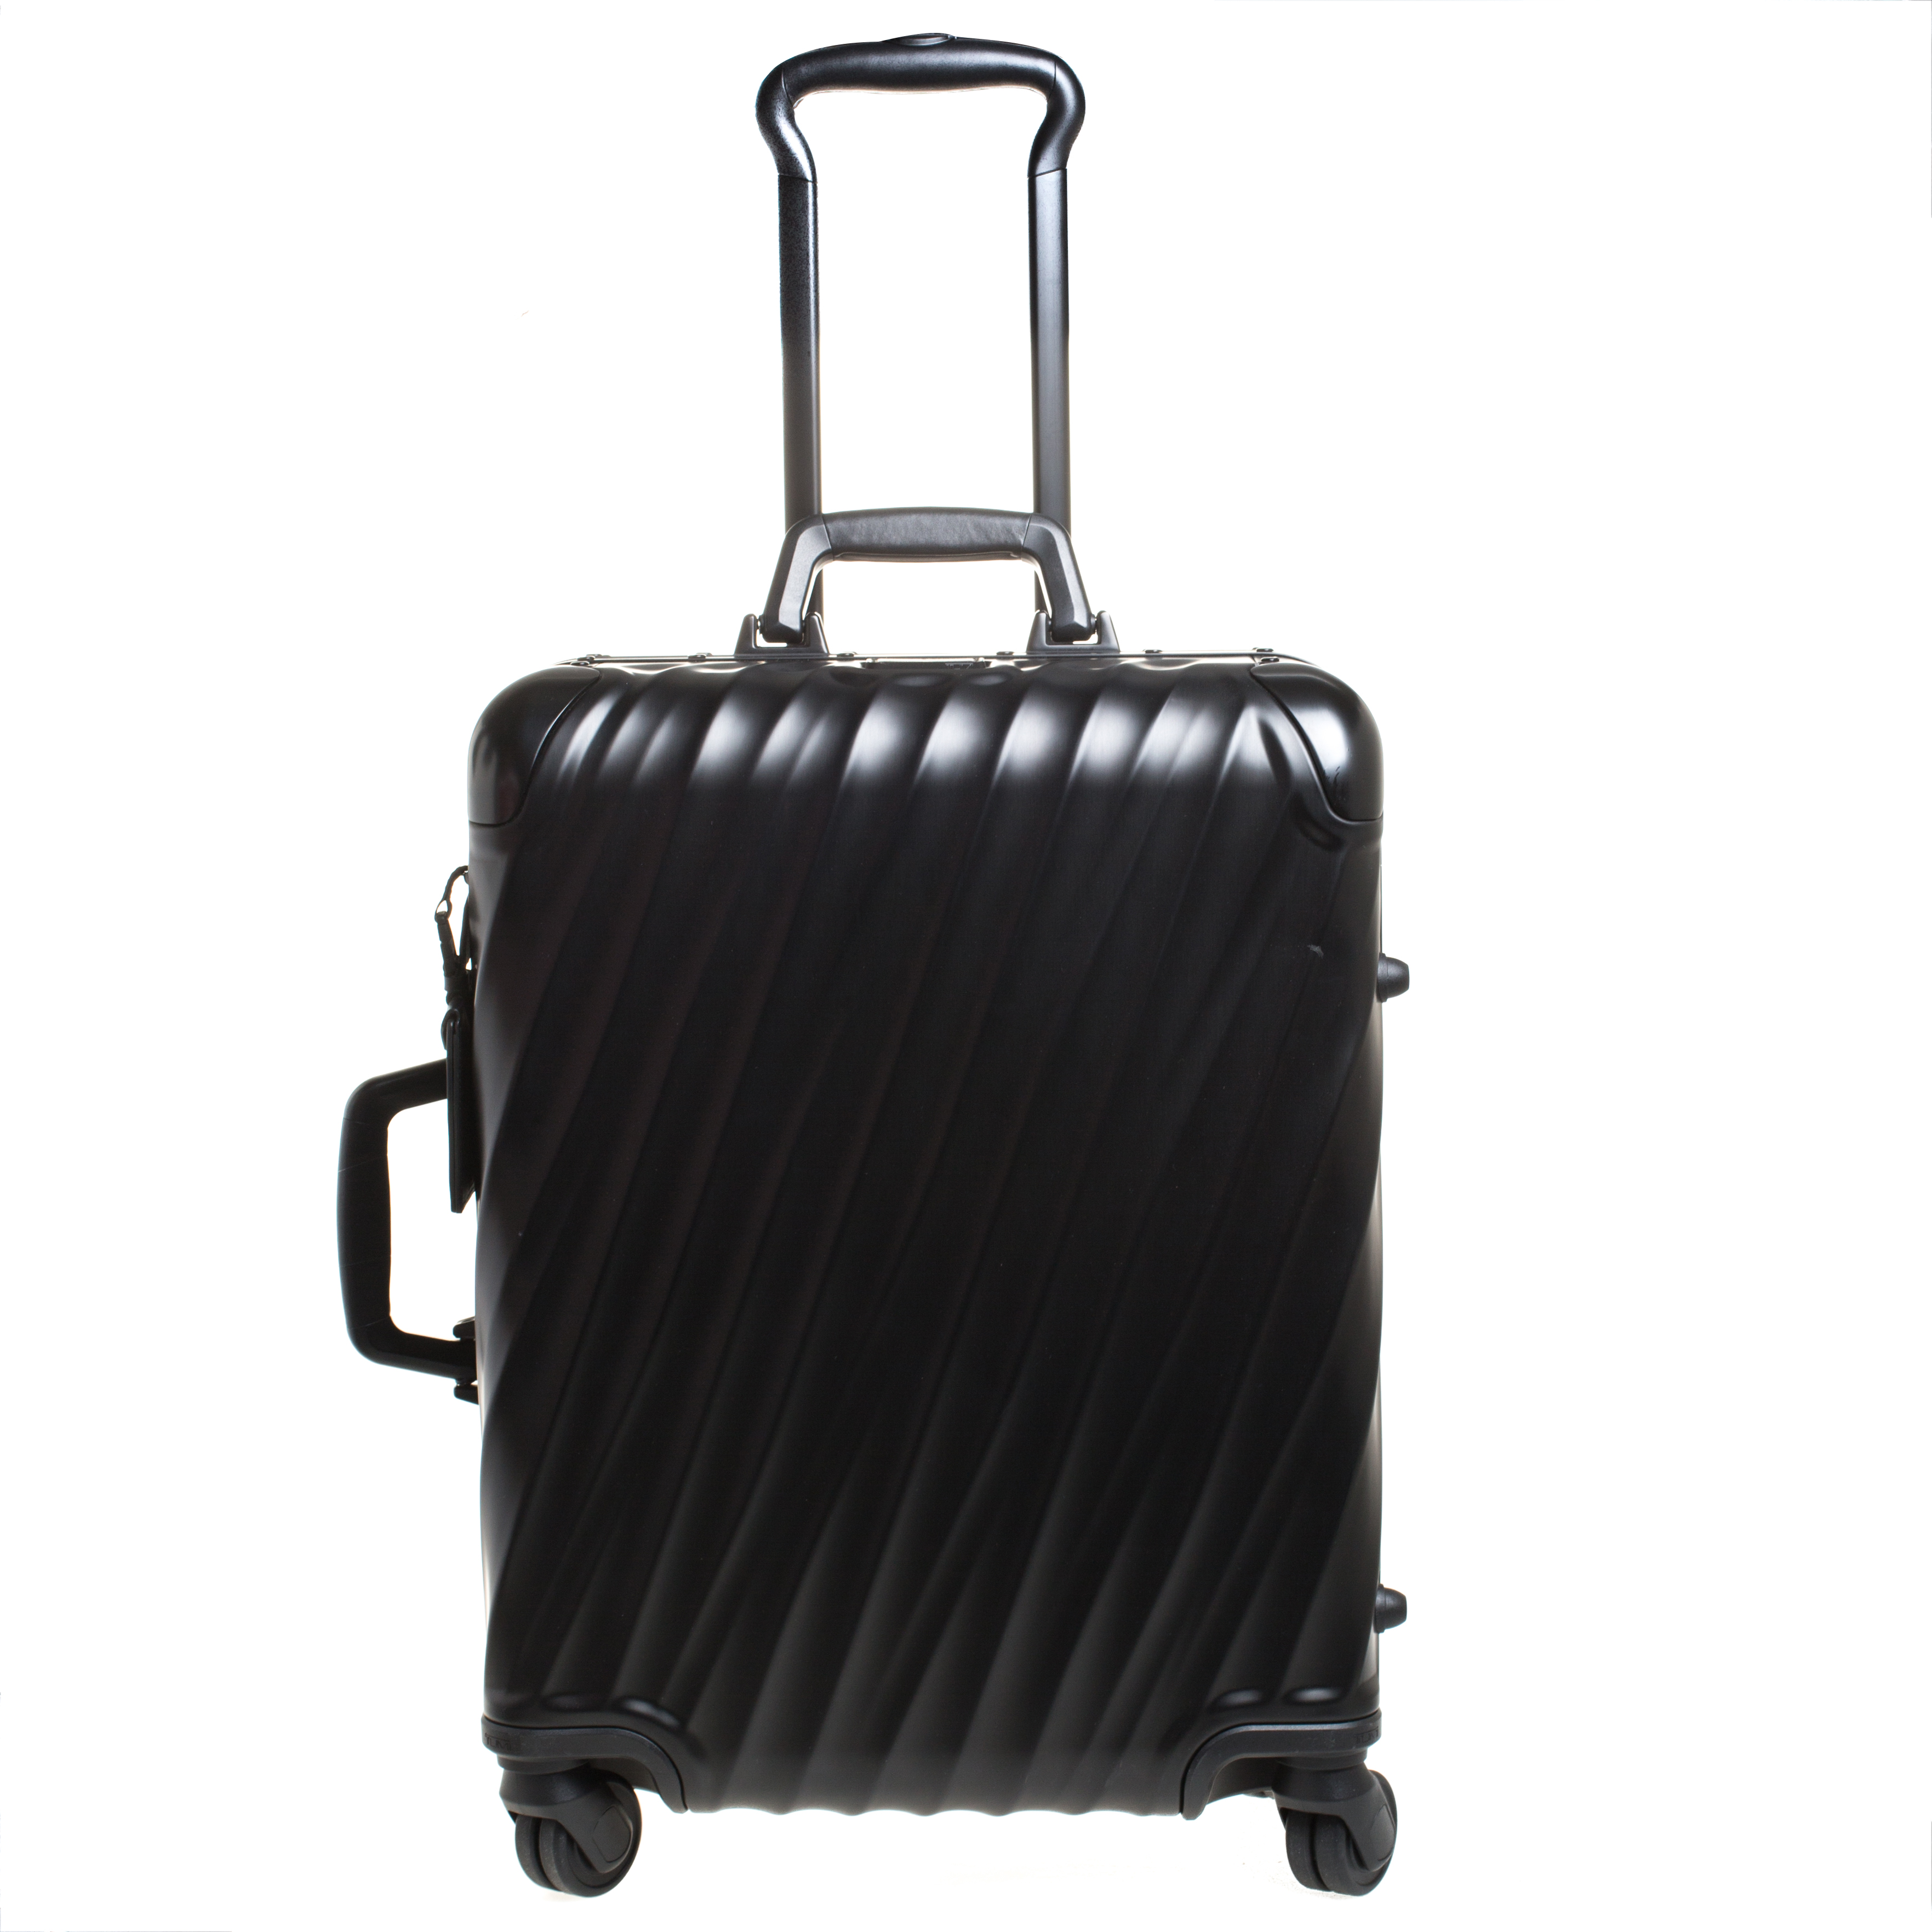 TUMI Black Aluminum 4 Wheel Short Trip Packing Case 19 Degrees Luggage 55